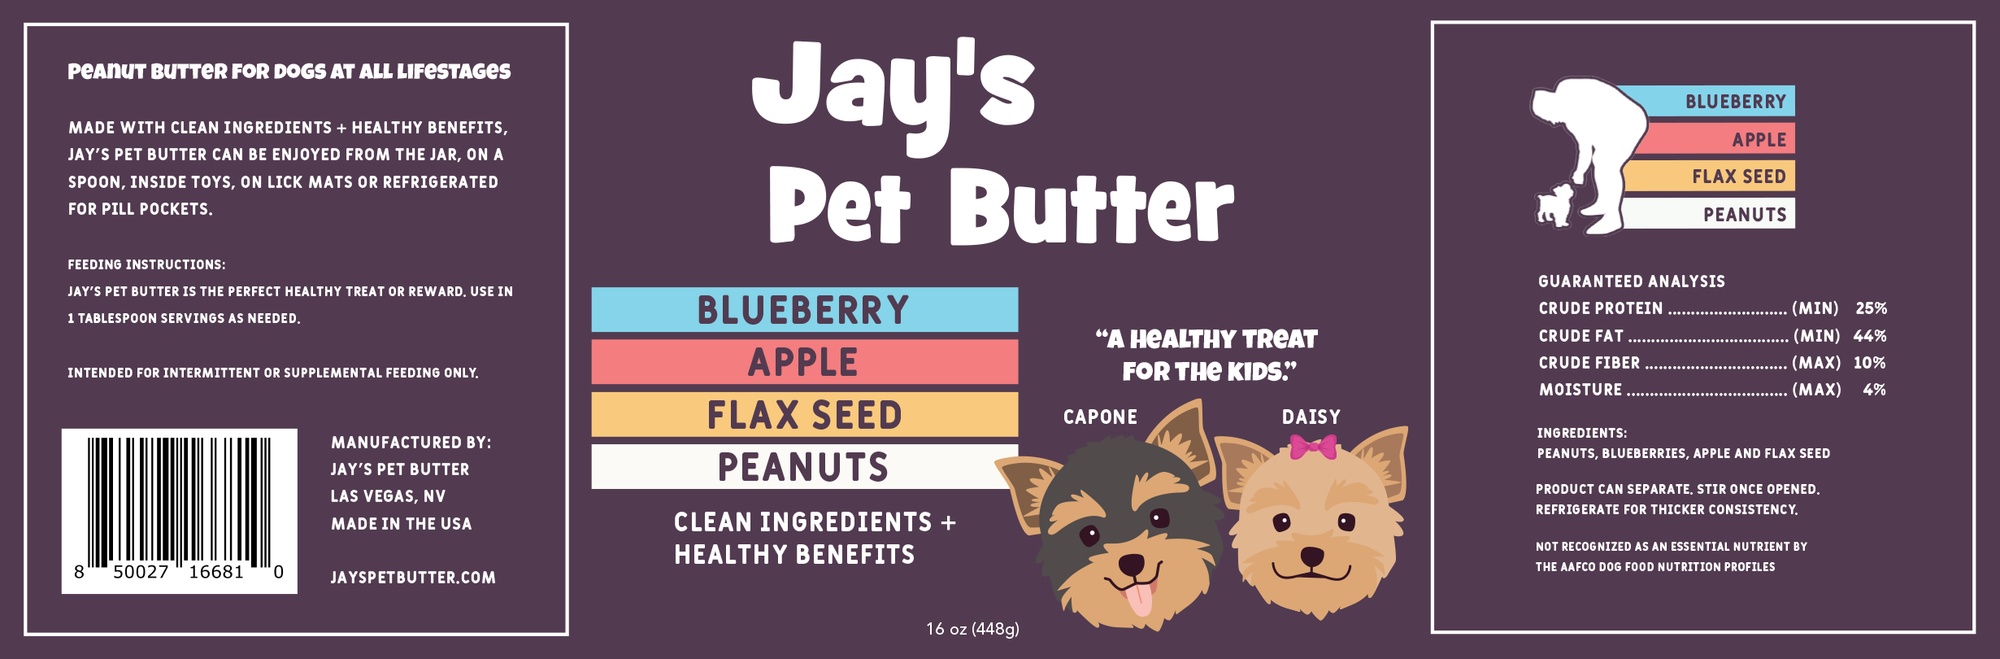 Jay's Pet Butter | Blueberry, Apple & Flax Seed  | 16 Ounce Jar